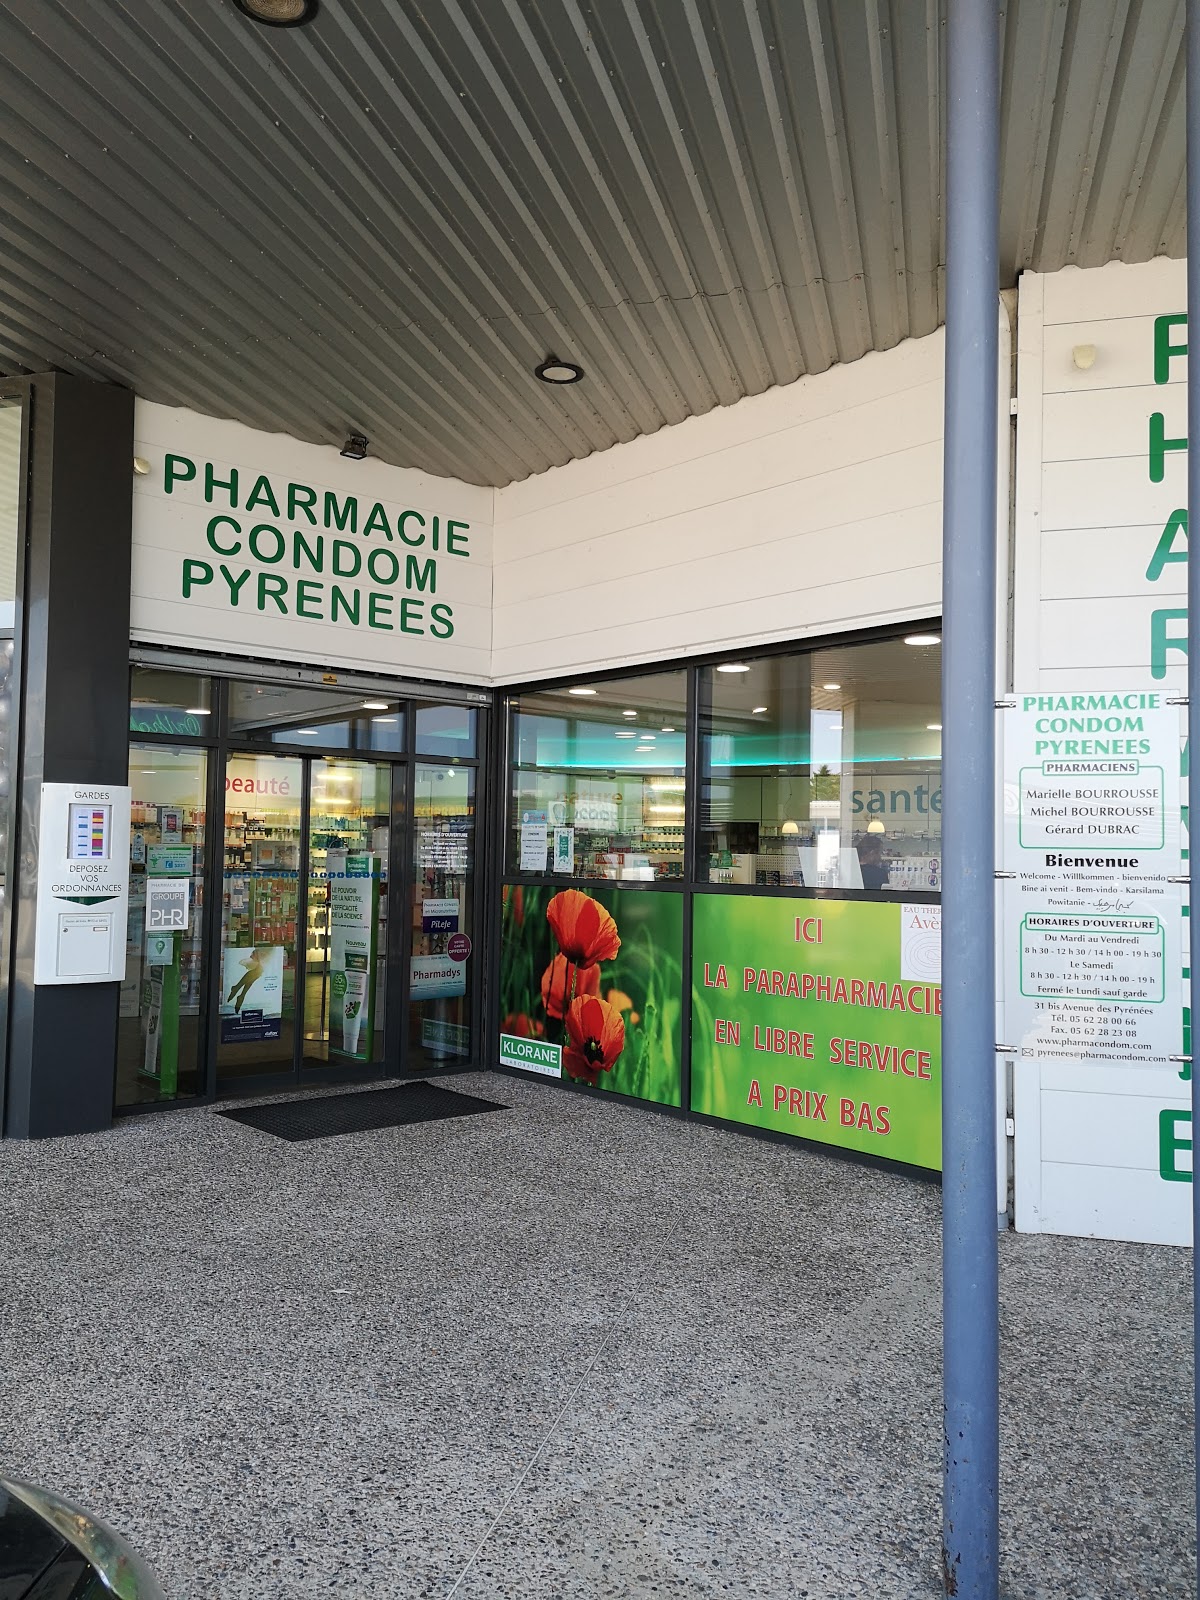 Pharmacie Condom Pyrénées